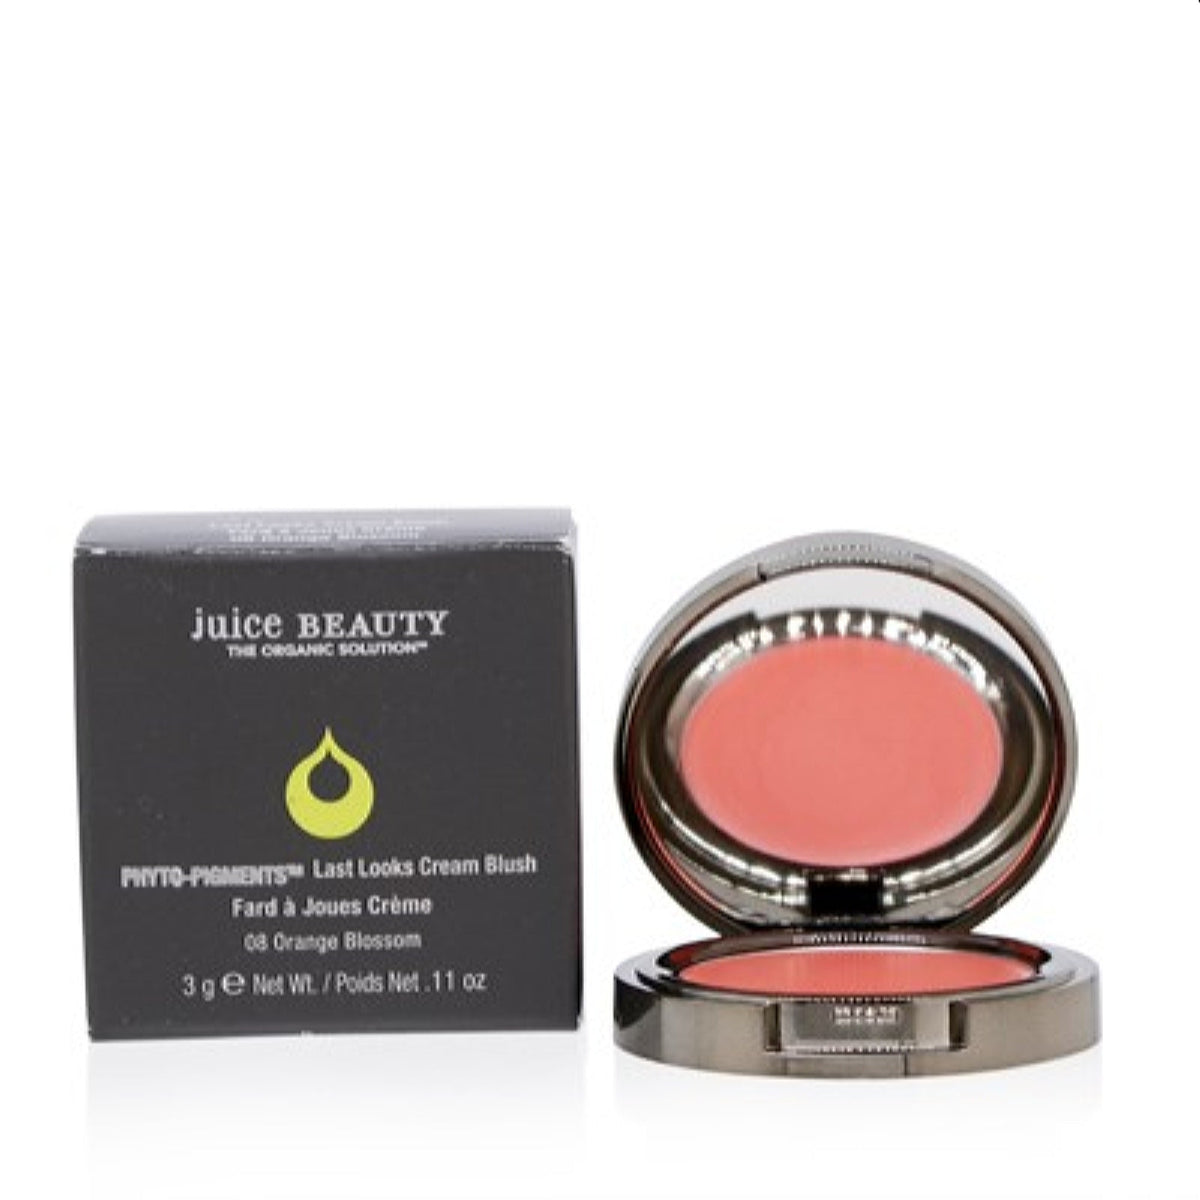 Juice Beauty Phyto-Pigments Last Looks Cream Blush (08-Orange Blossom) 0.11 Oz  